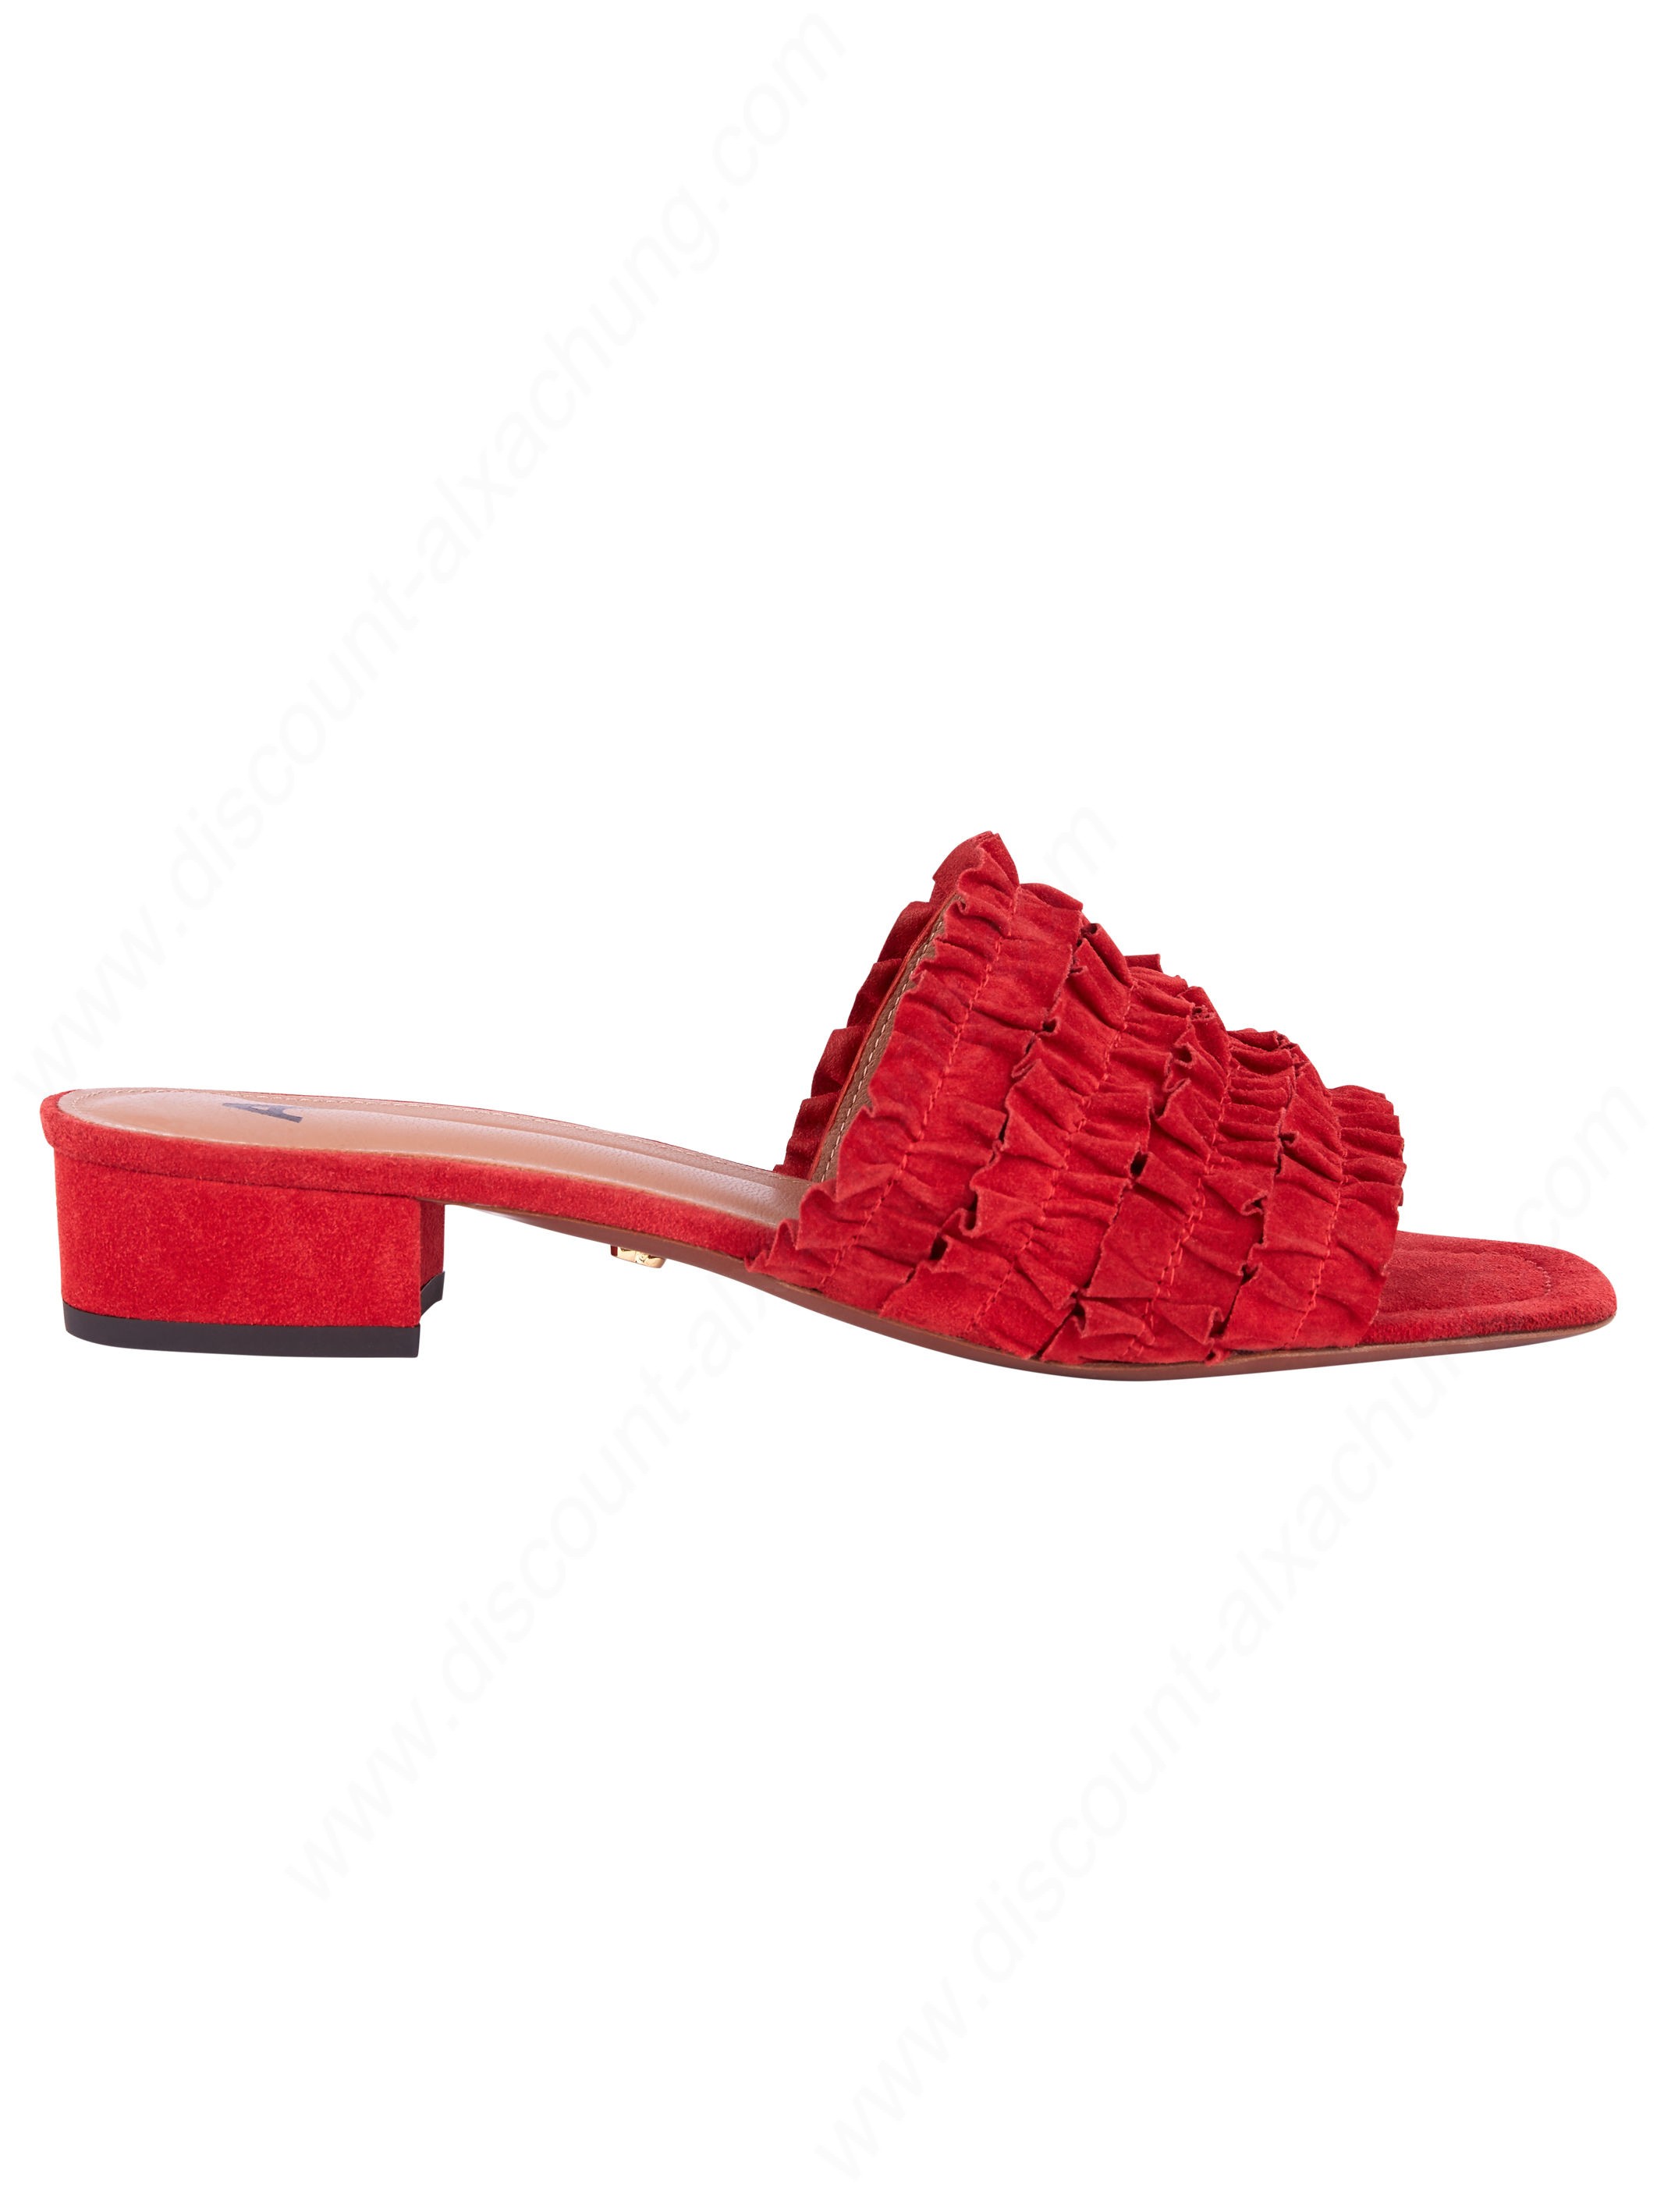 Alexachung Red Ruffle Sandal - Alexachung Red Ruffle Sandal